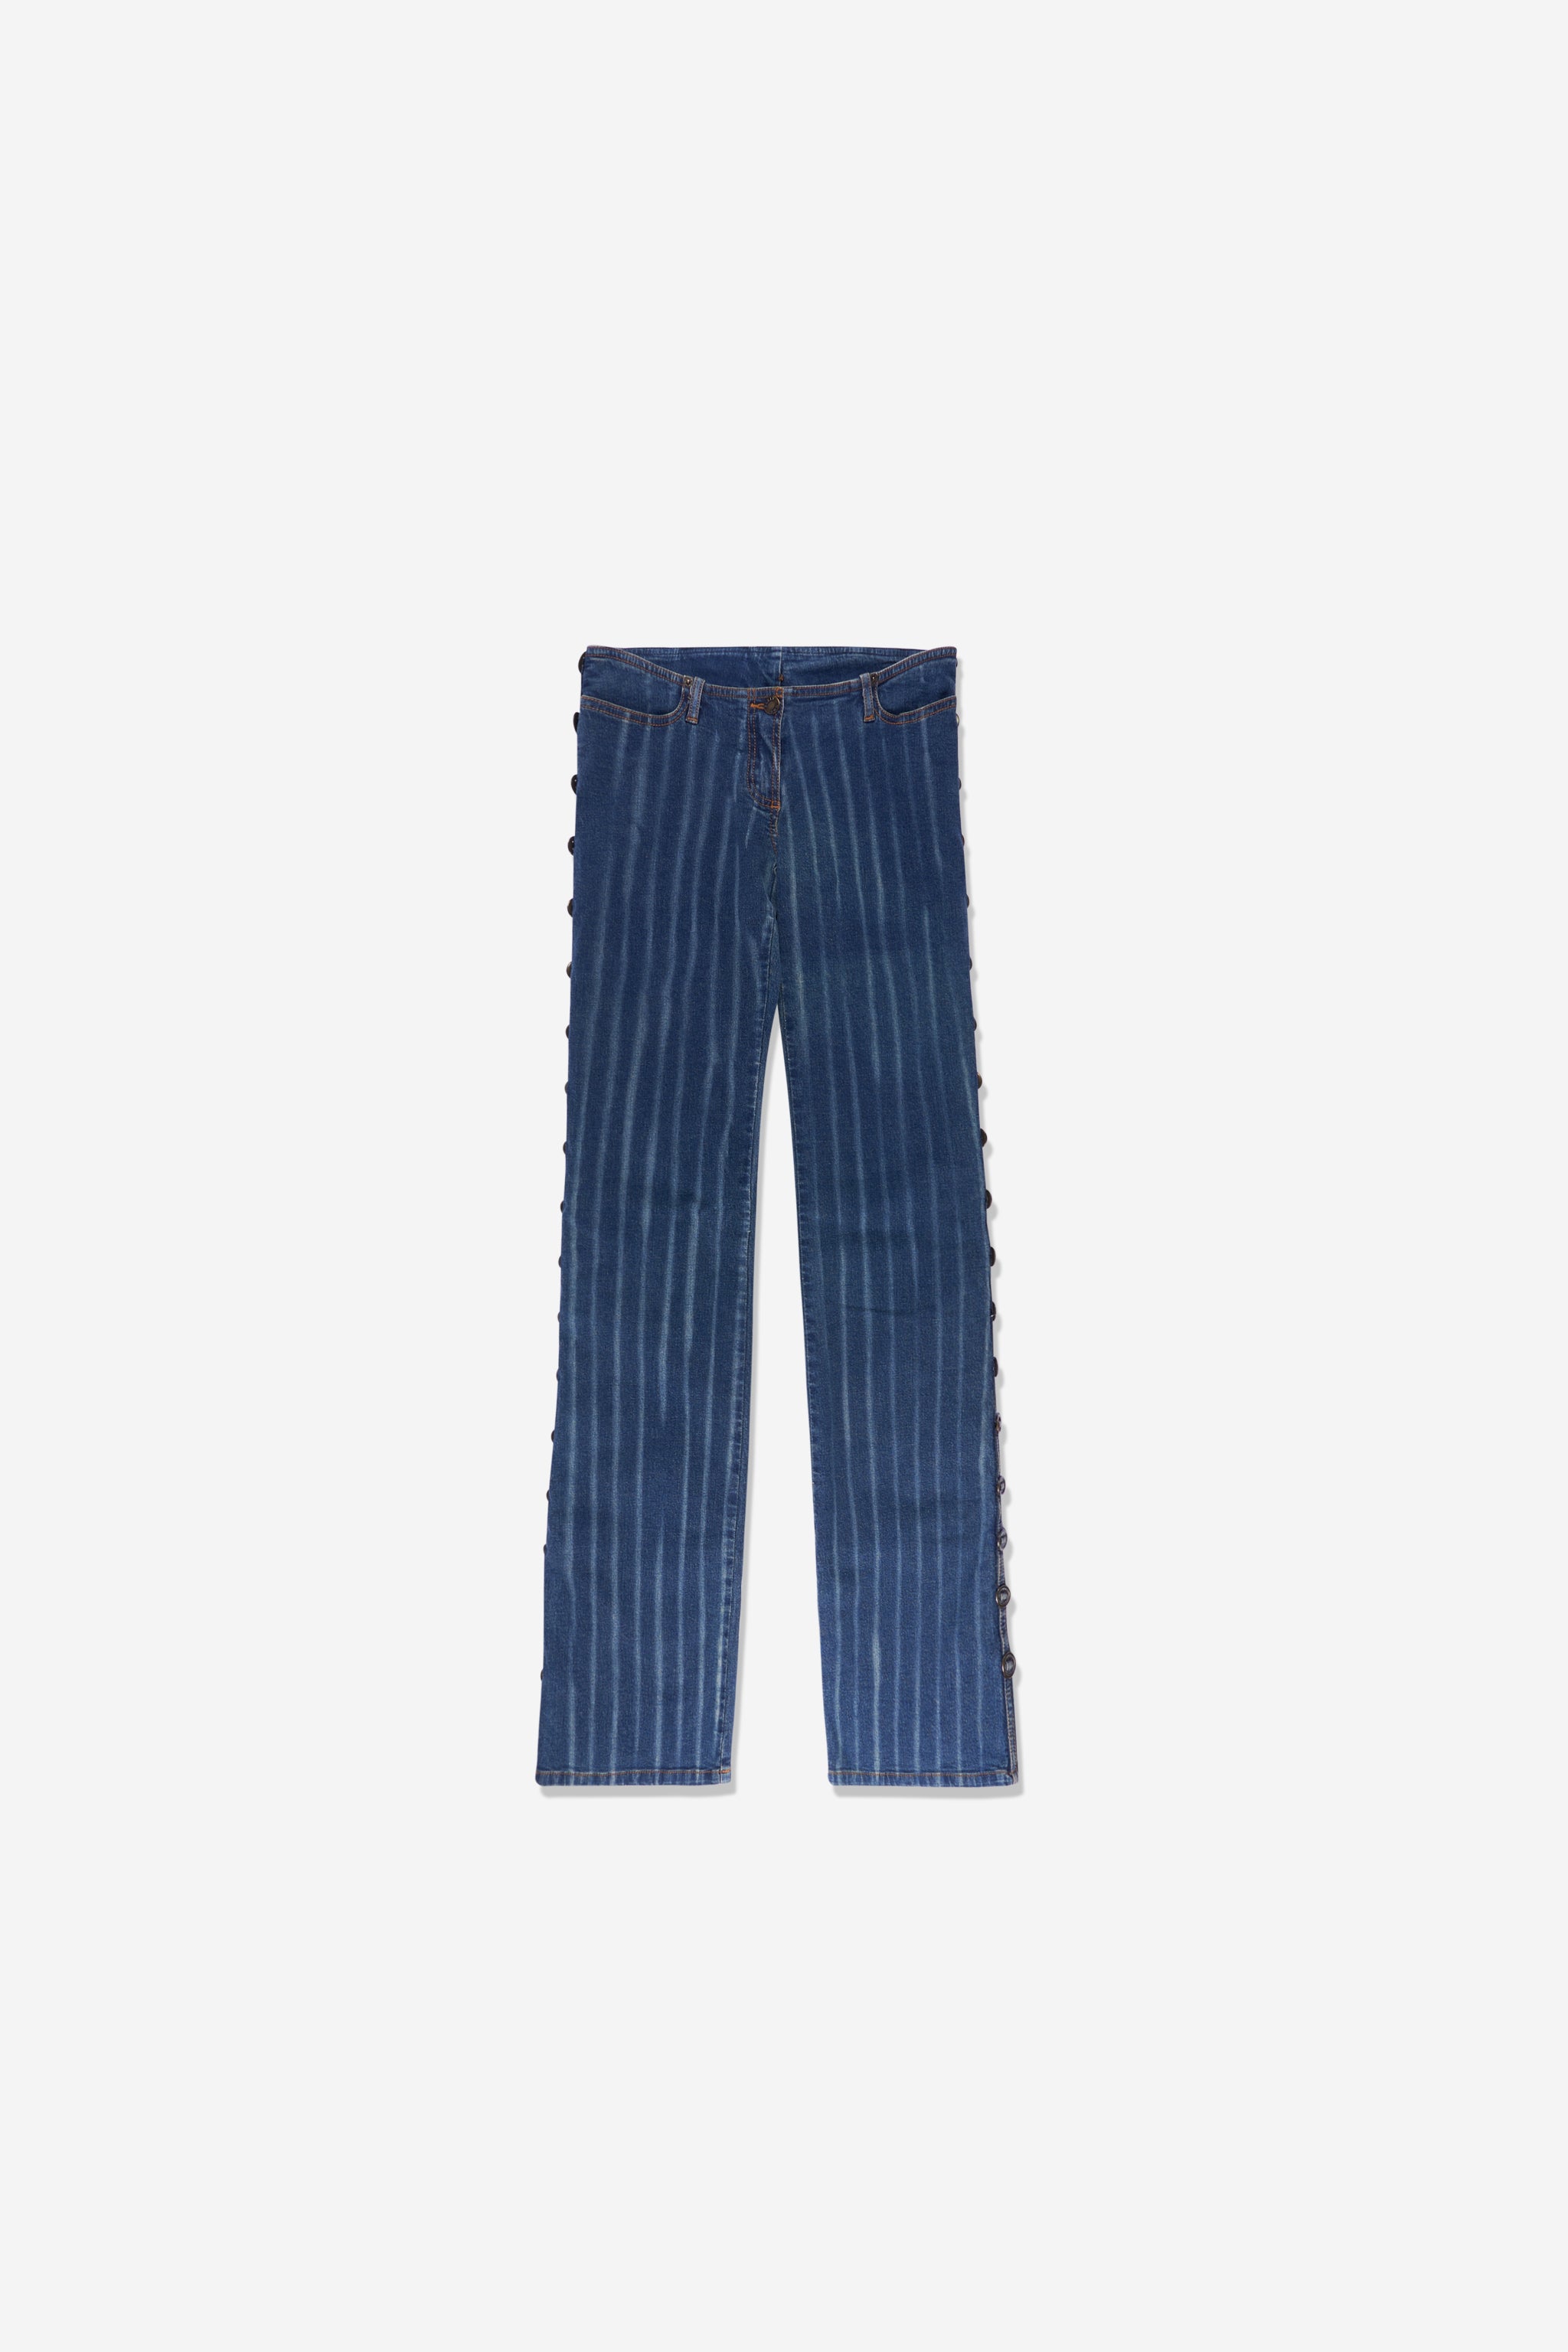 Striped denim jeans